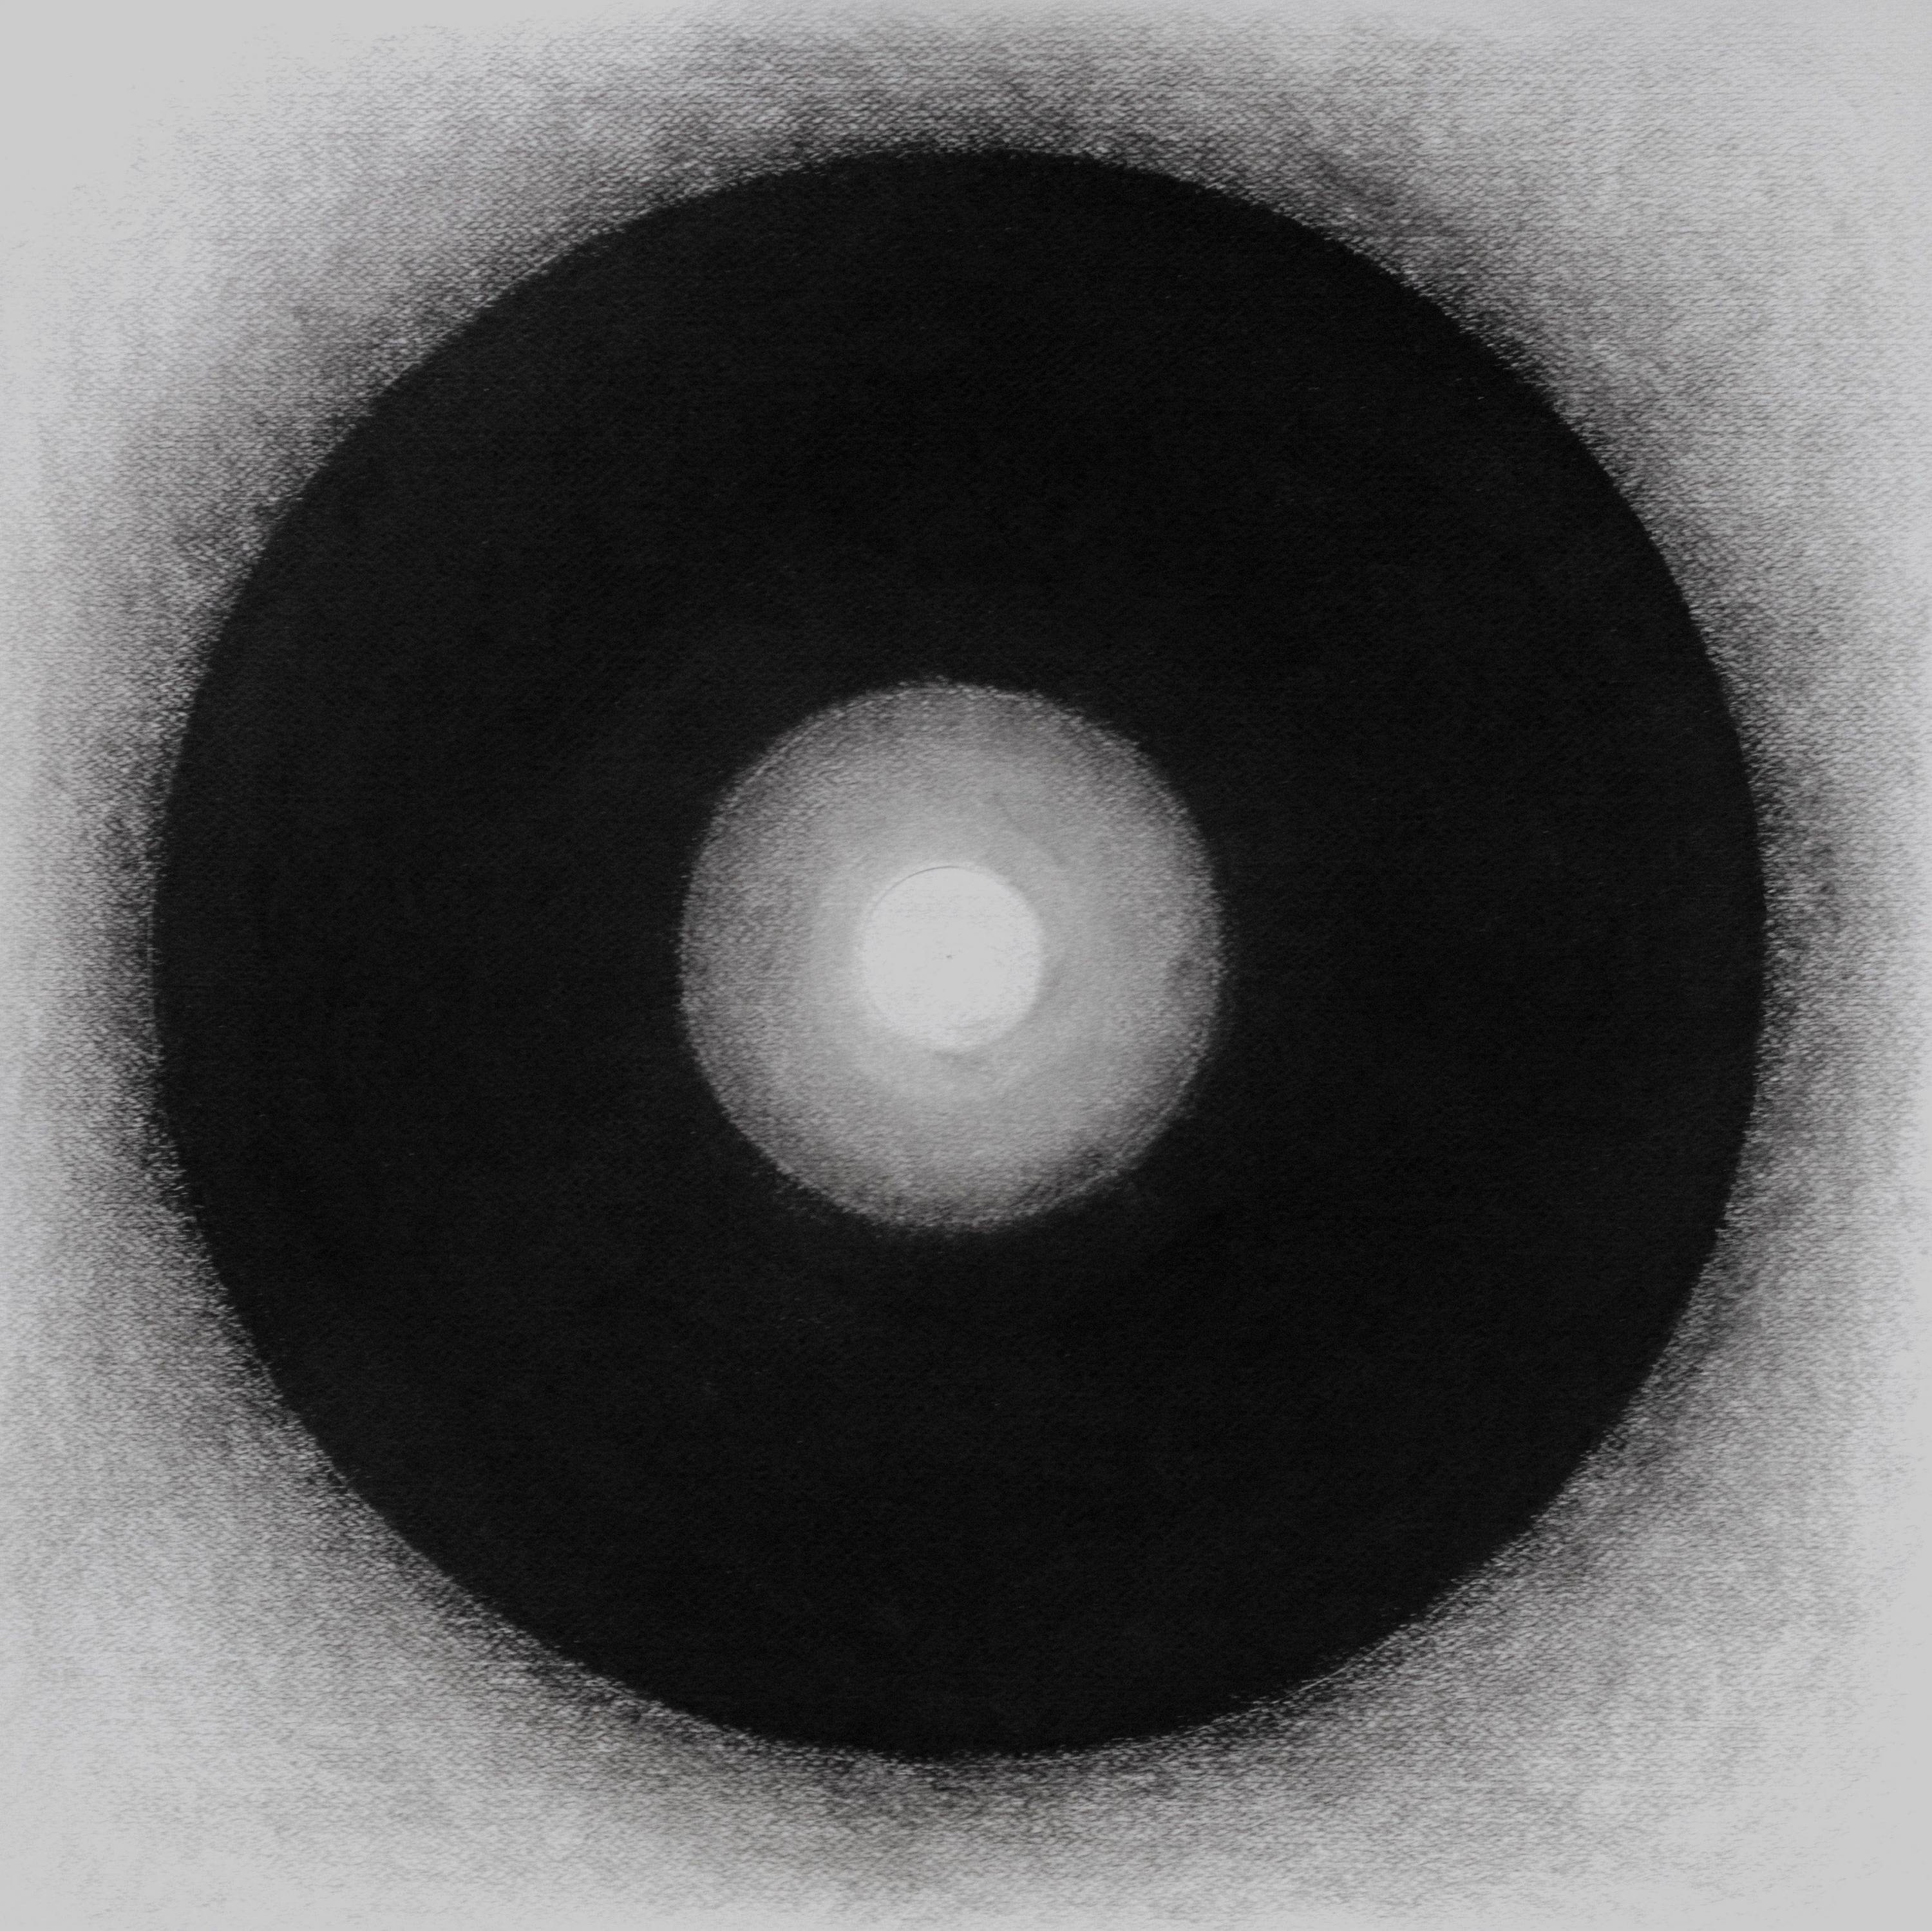 ernie-klinger-black-sun-abstract-drawing-minimalist-art-online-gallery